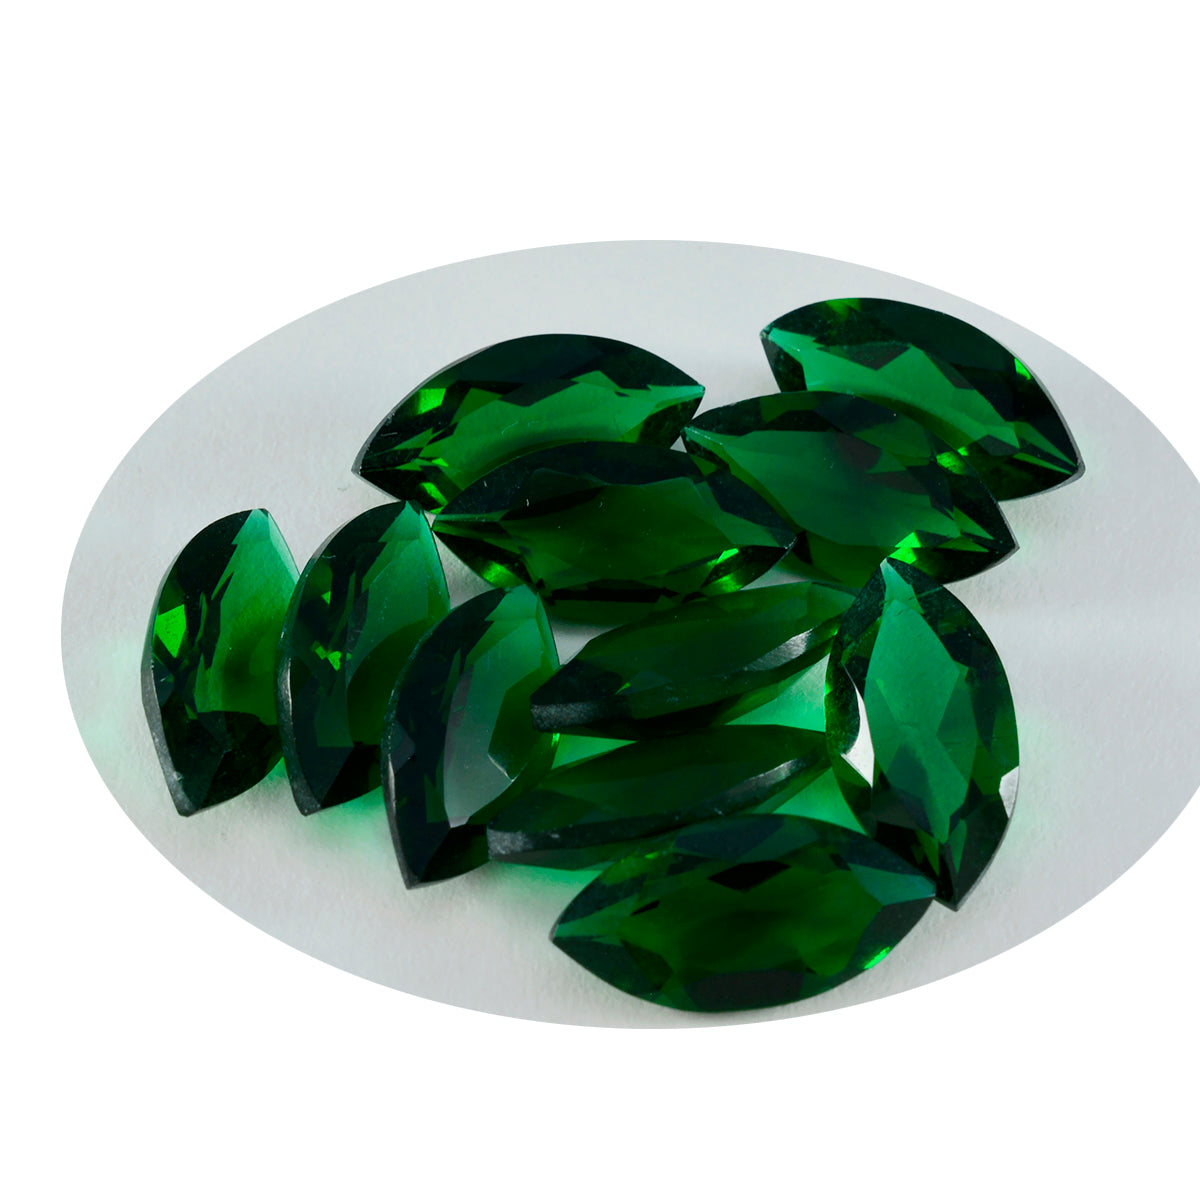 Riyogems 1PC Green Emerald CZ Faceted 8x16 mm Marquise Shape A+1 Quality Gems